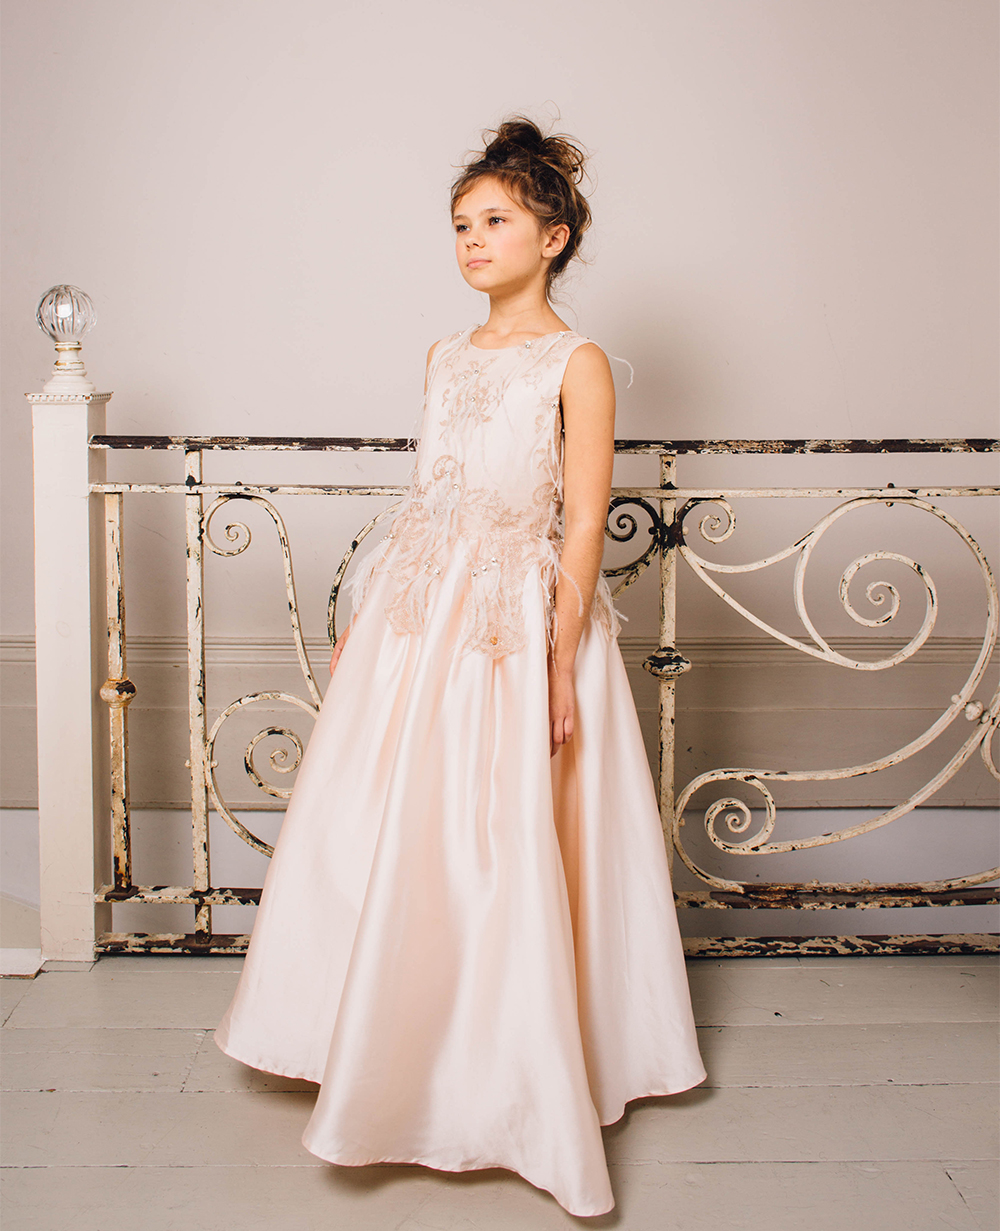 Cream Satin Dress Maxi Dress Sleeveless Lace Dress